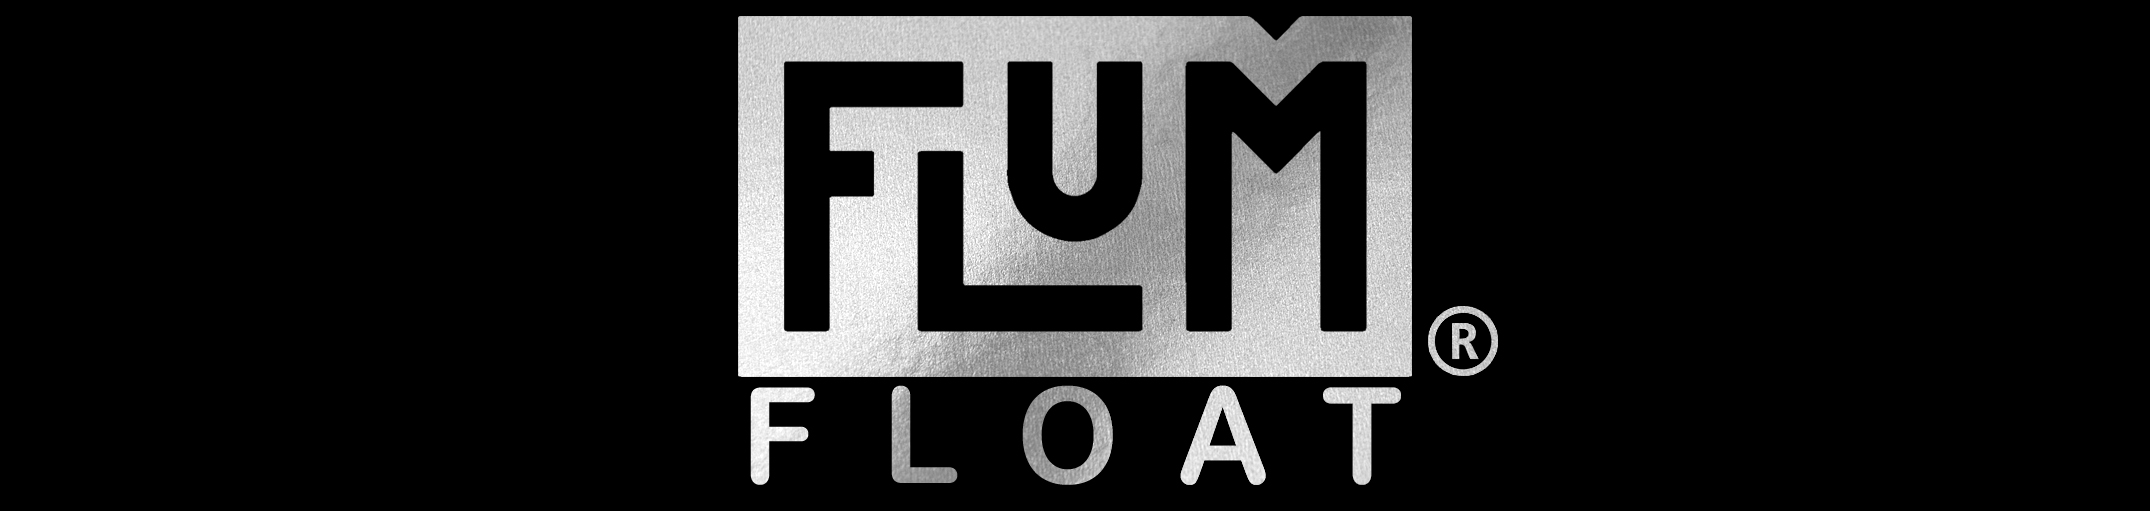 Flum Float Black Edition